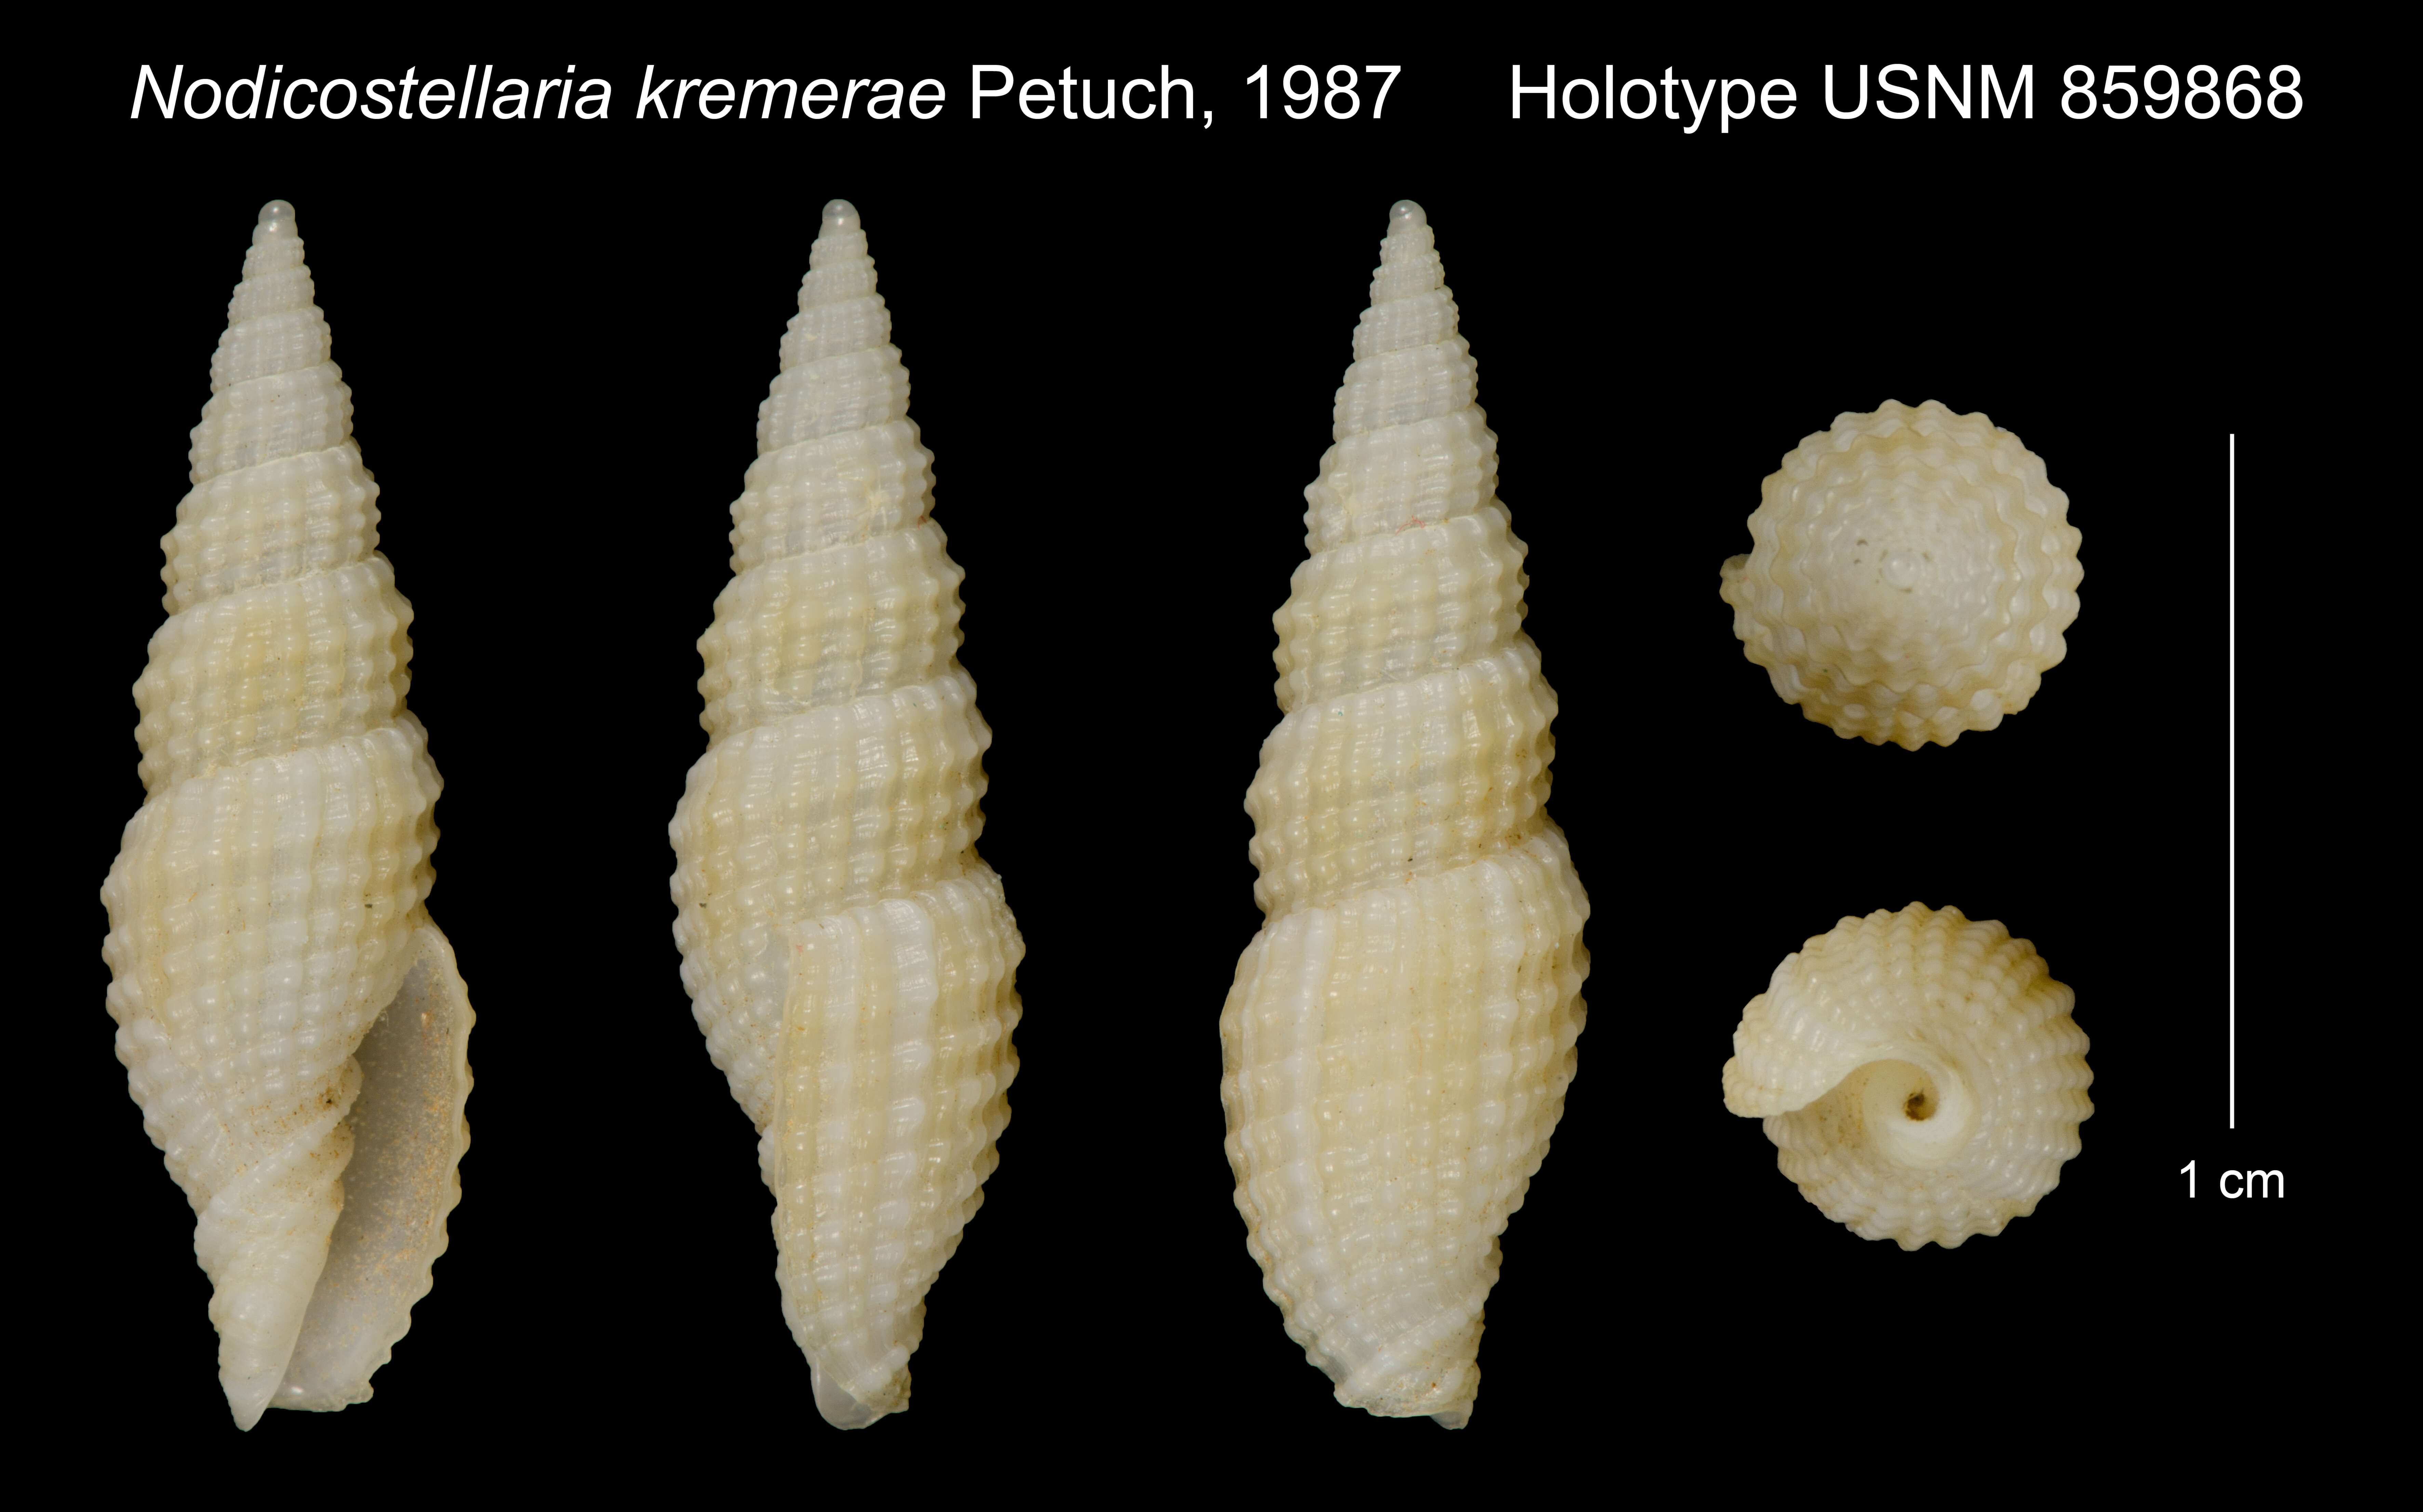 Image of Nodicostellaria kremerae Petuch 1987